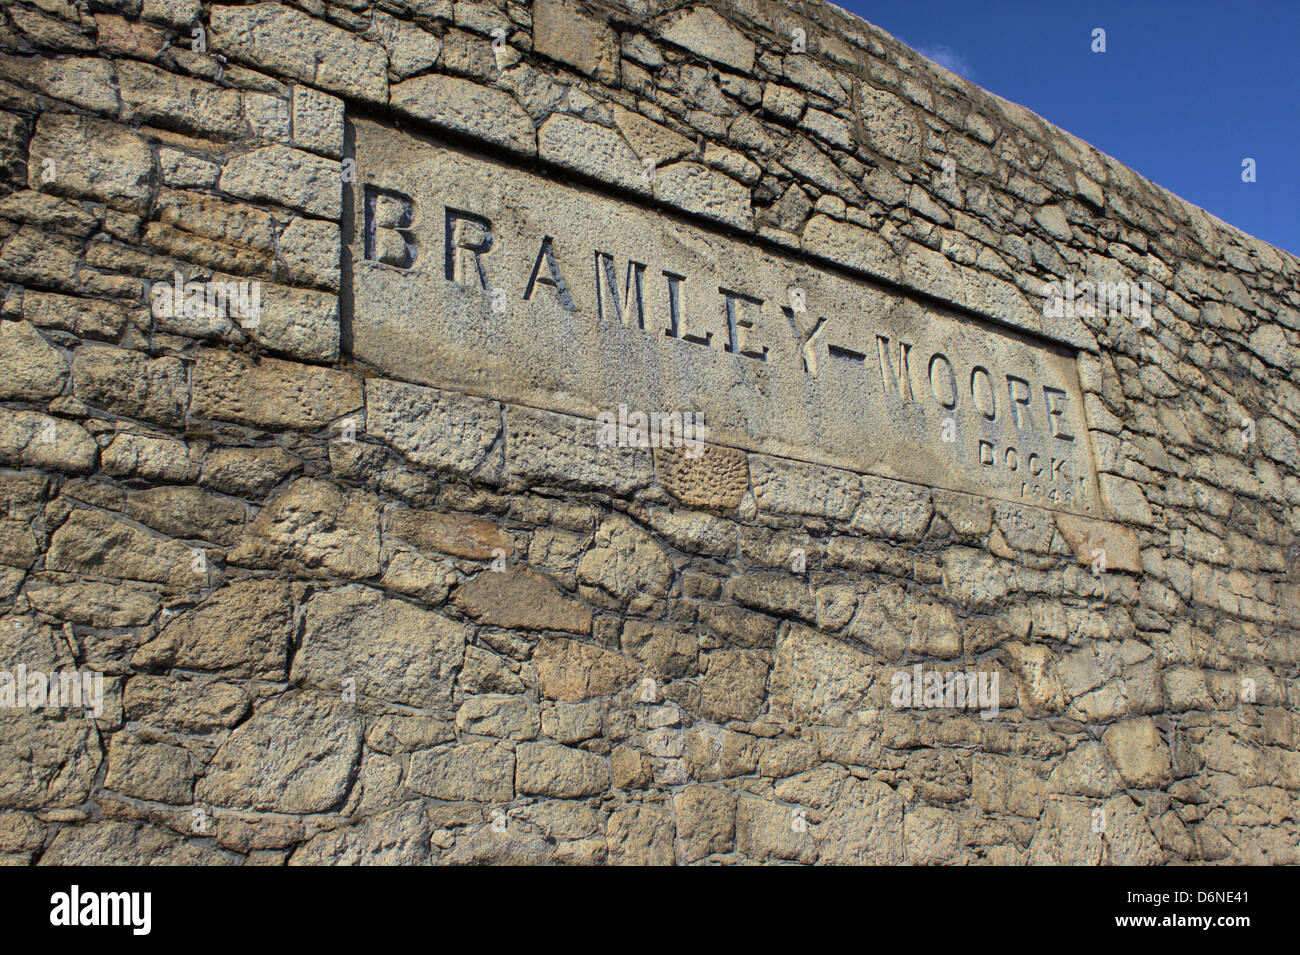 Bramley-Moore dock sign. Stock Photo